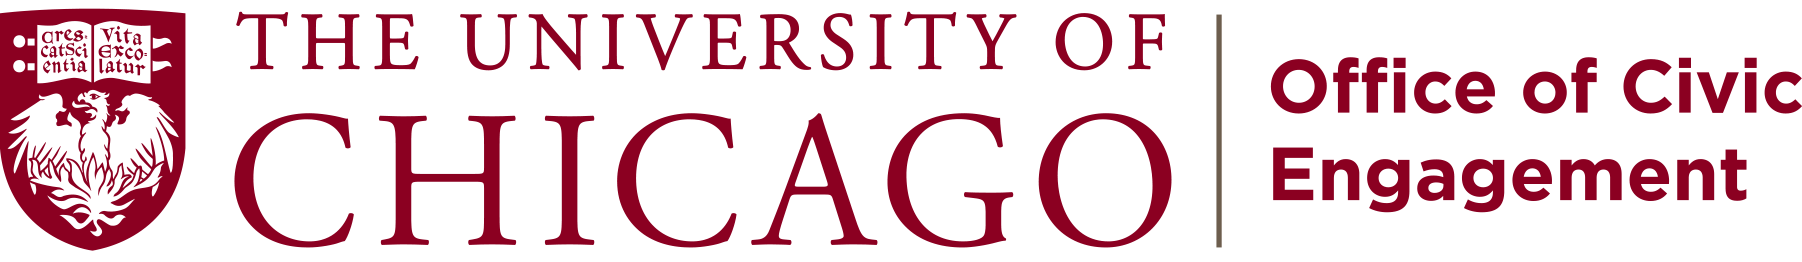 University of Chicago Logo - University Community Service Center | The University of Chicago